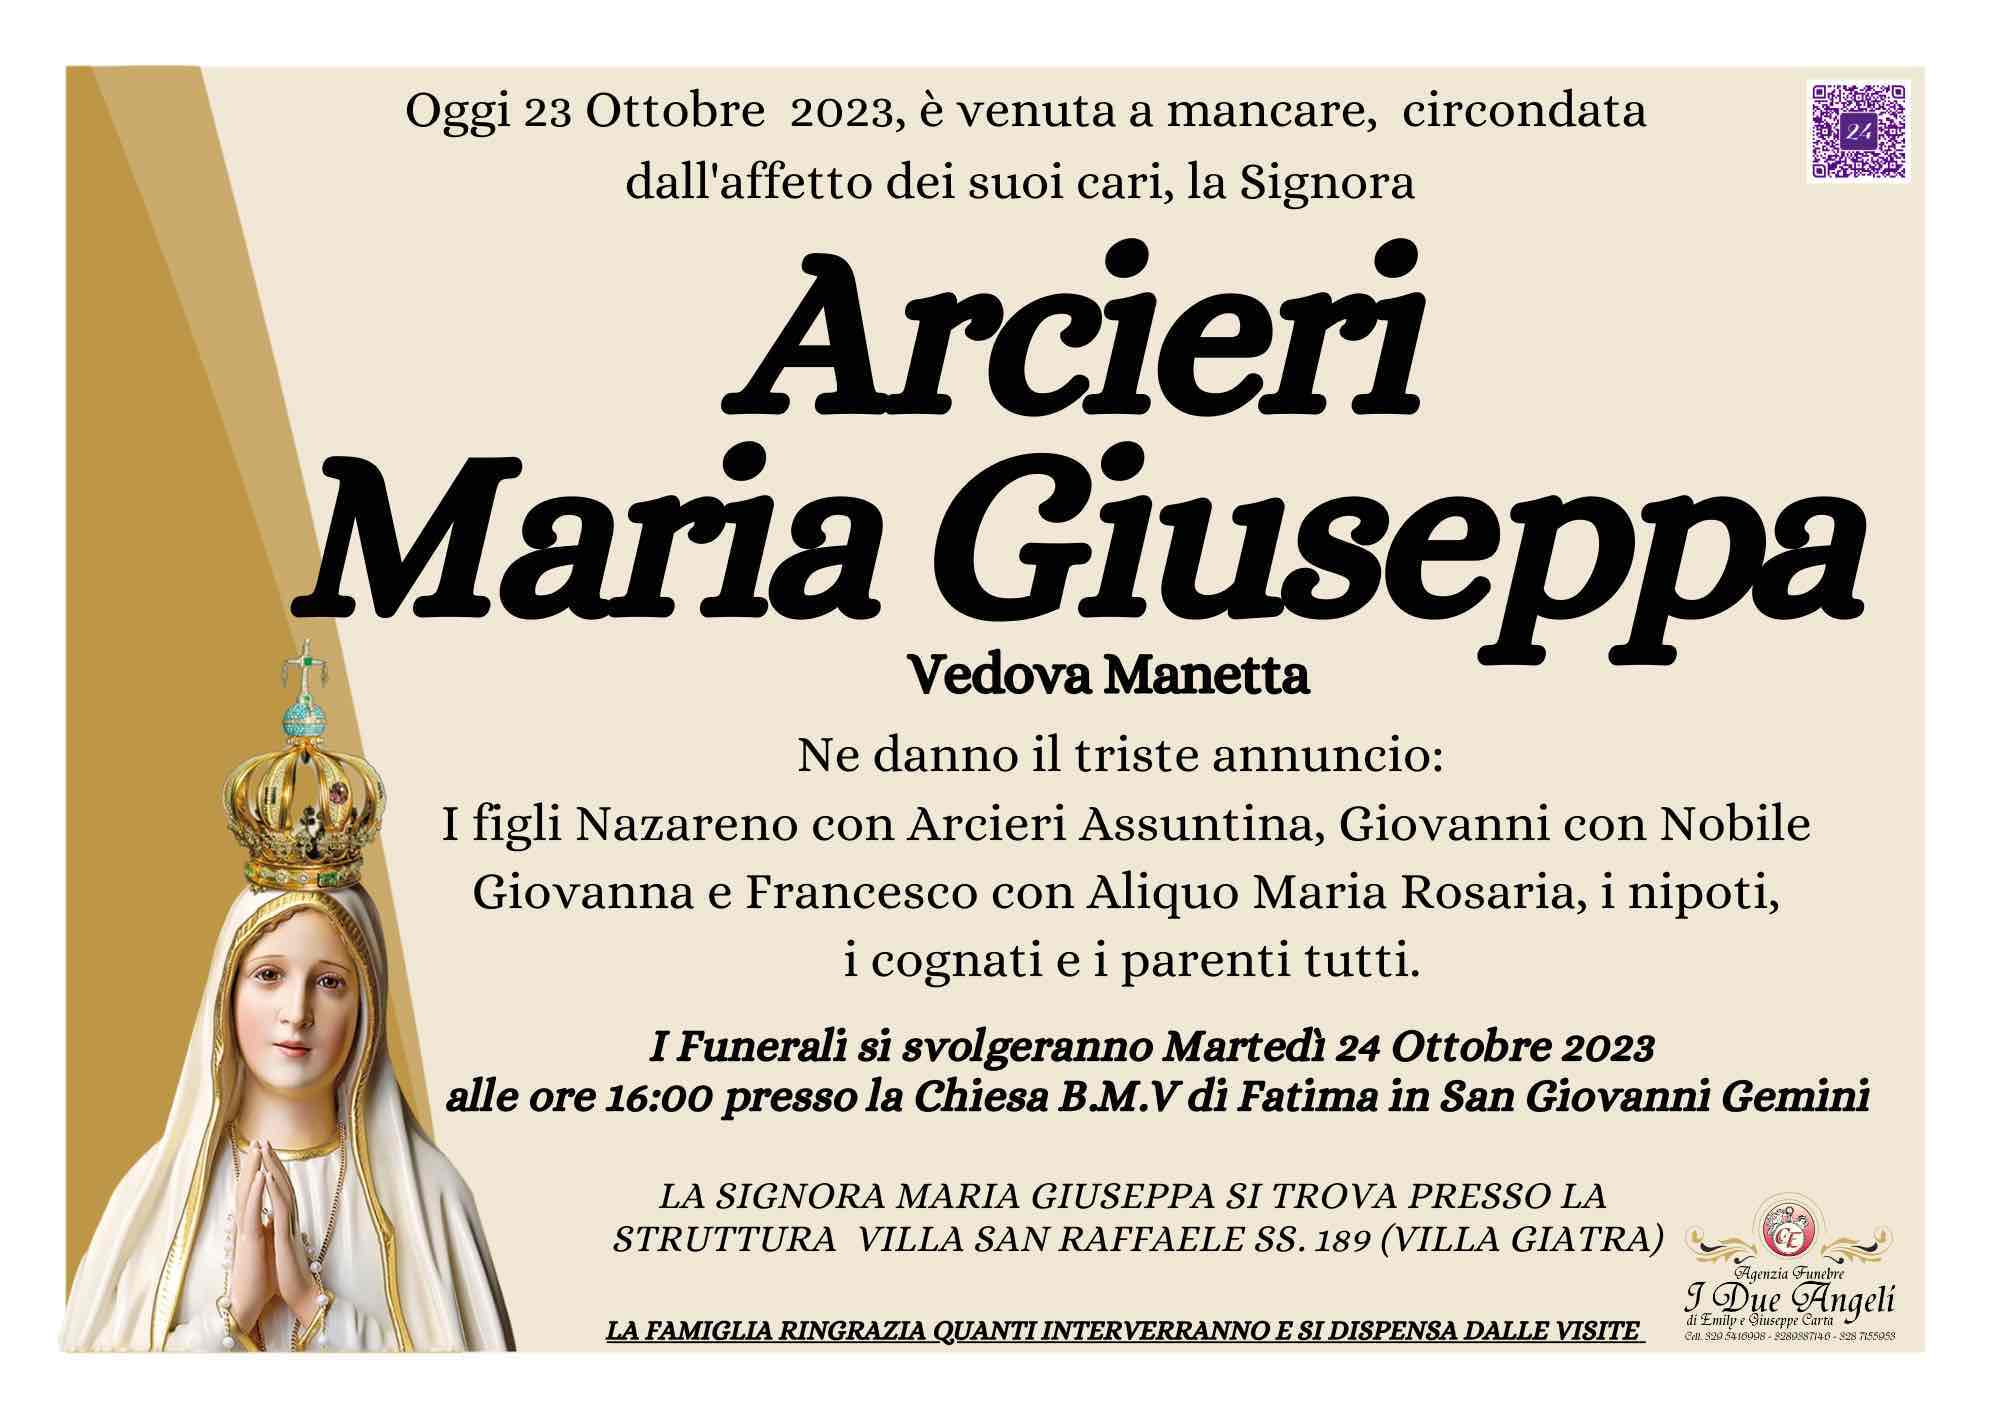 Maria Giuseppa Arcieri